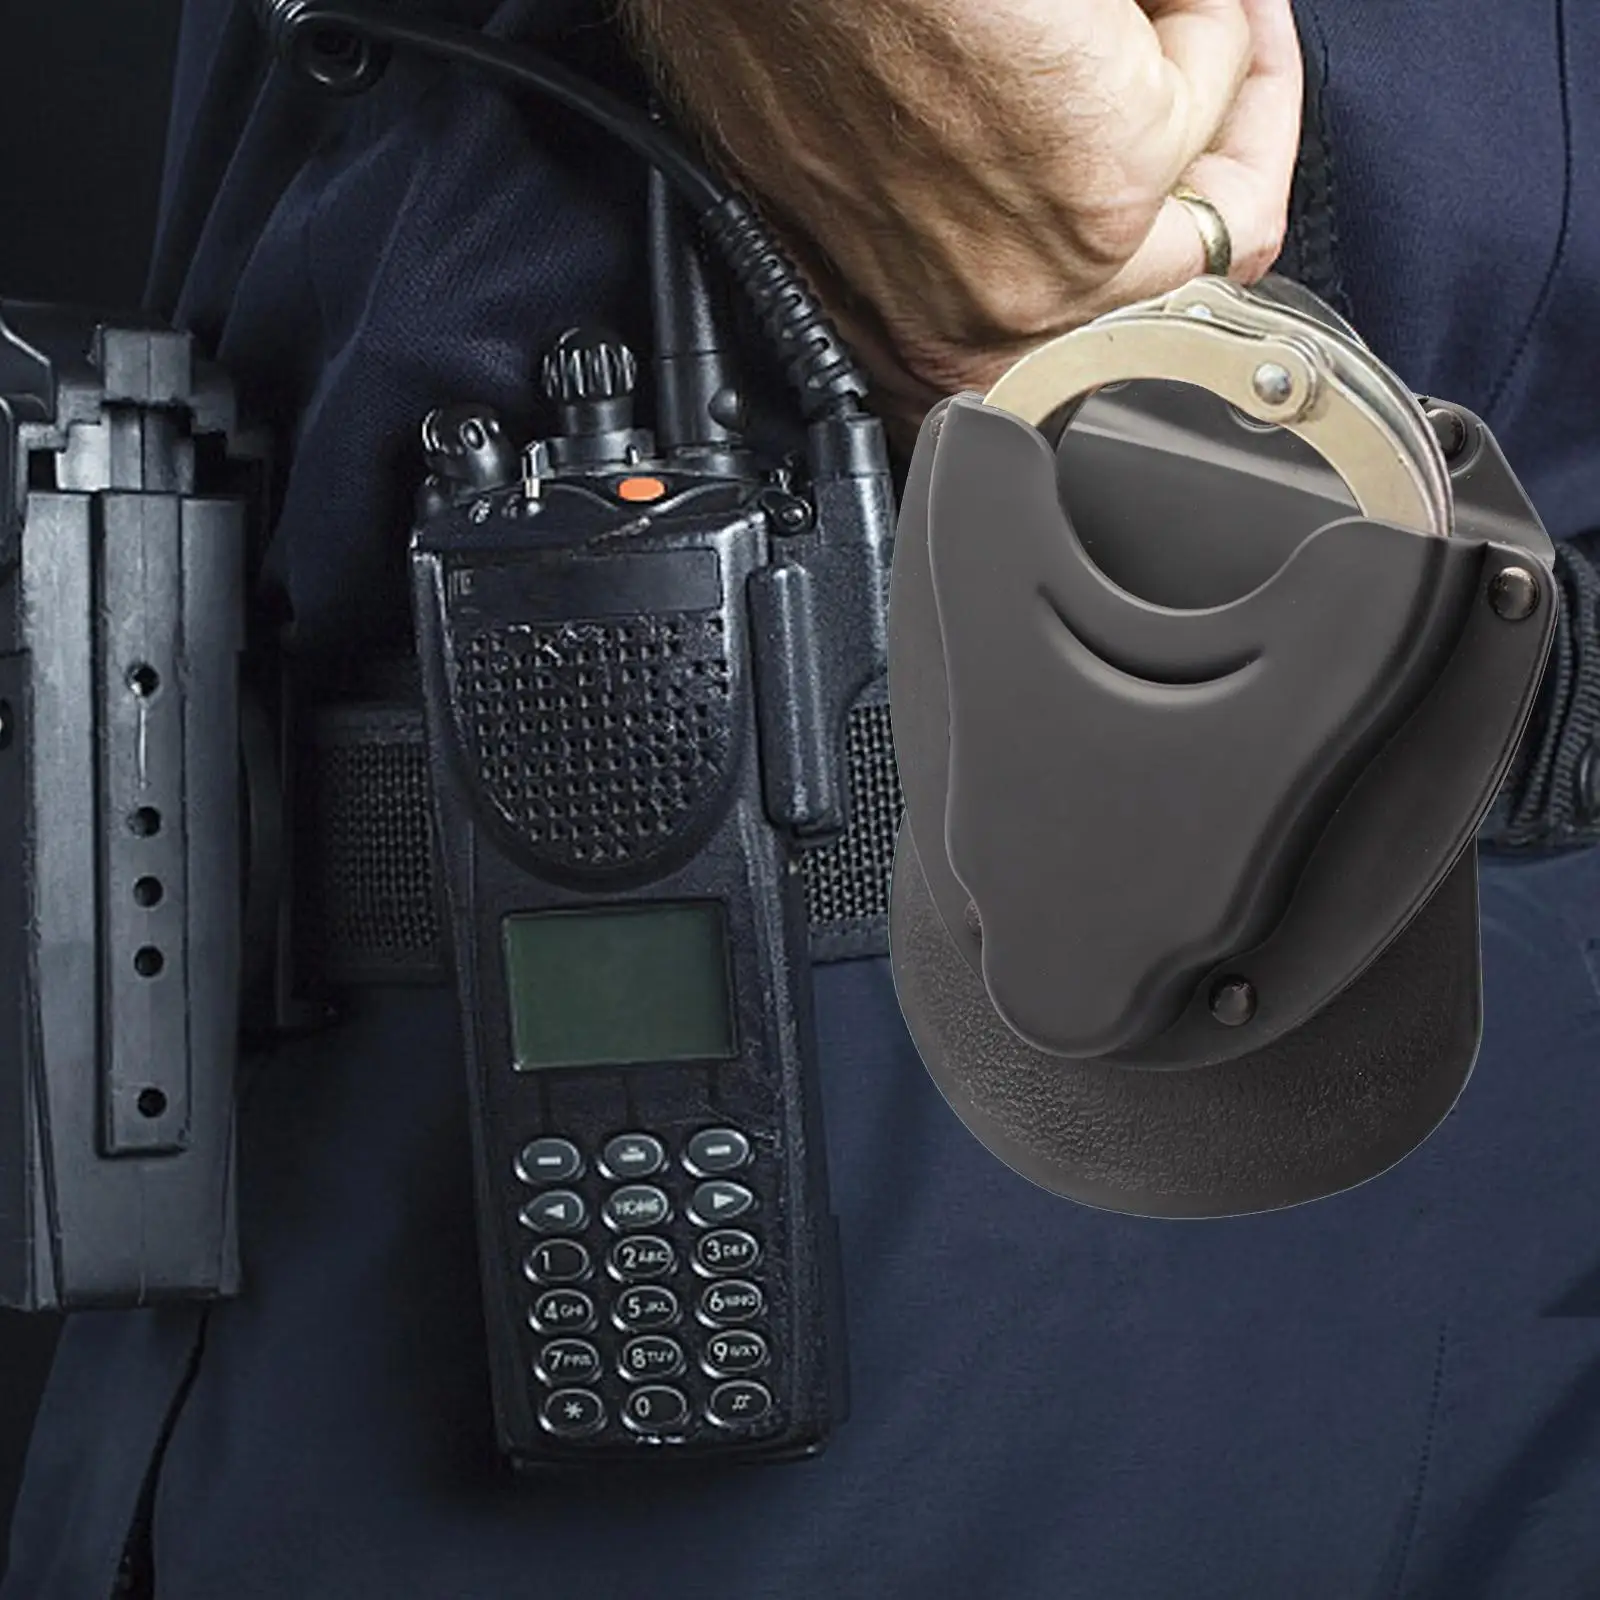 Handcuffs Pouch Quick Release Pocket Handcuffs Waist Bag Handcuff Holder for Camping Enforcement